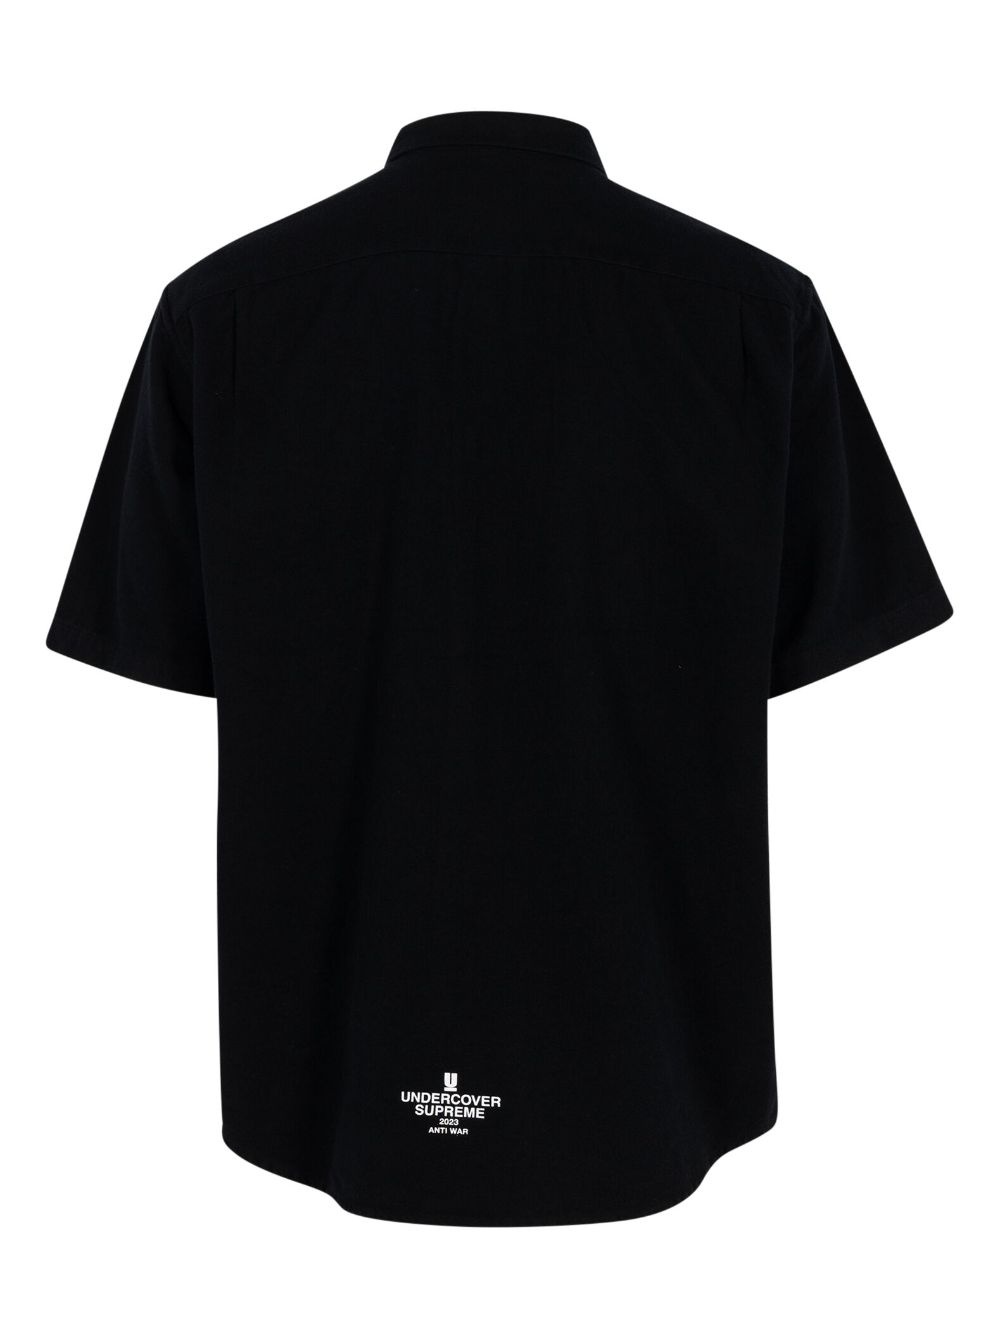 Supreme x Undercover short-sleeve flannel shirt | REVERSIBLE